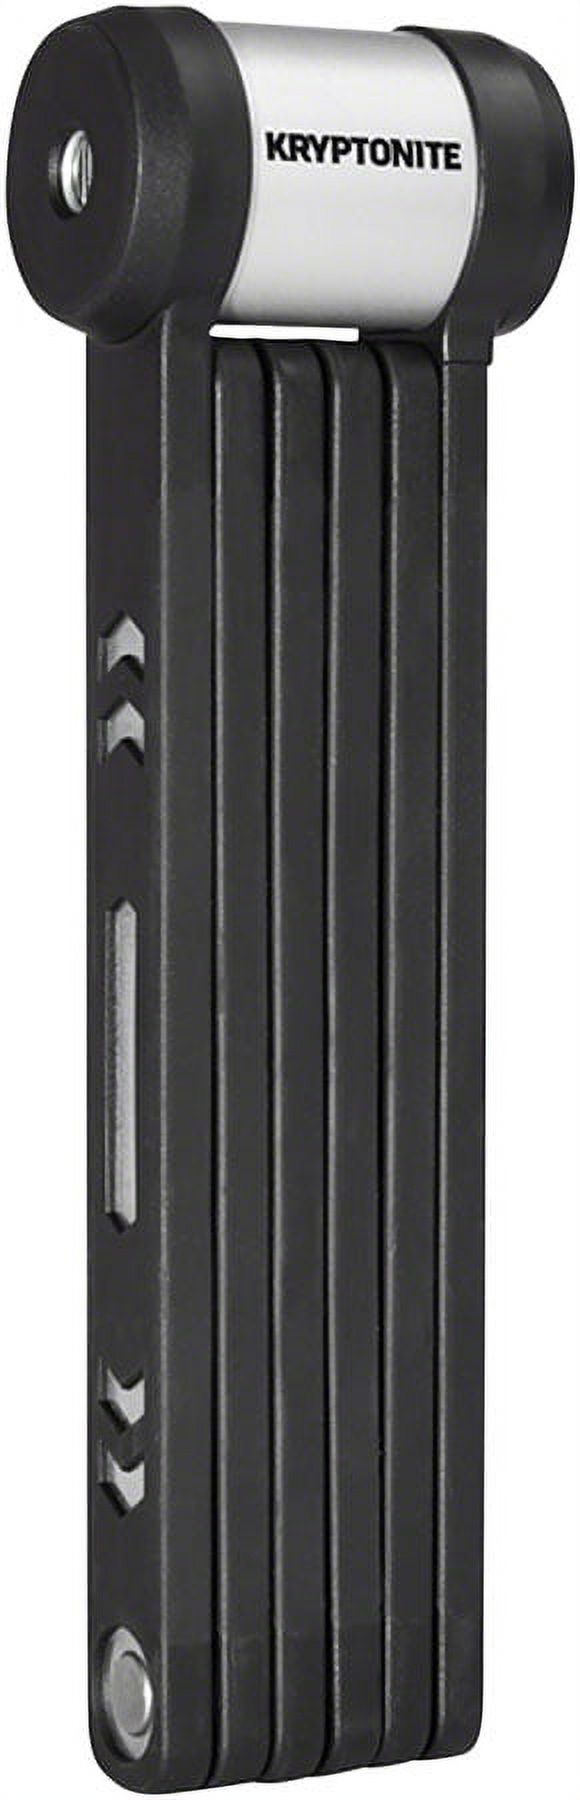 Kryptonite Kryptolok 610 S Folding Lock 100cm 5mm Black Includes 2 Keys - image 2 of 4